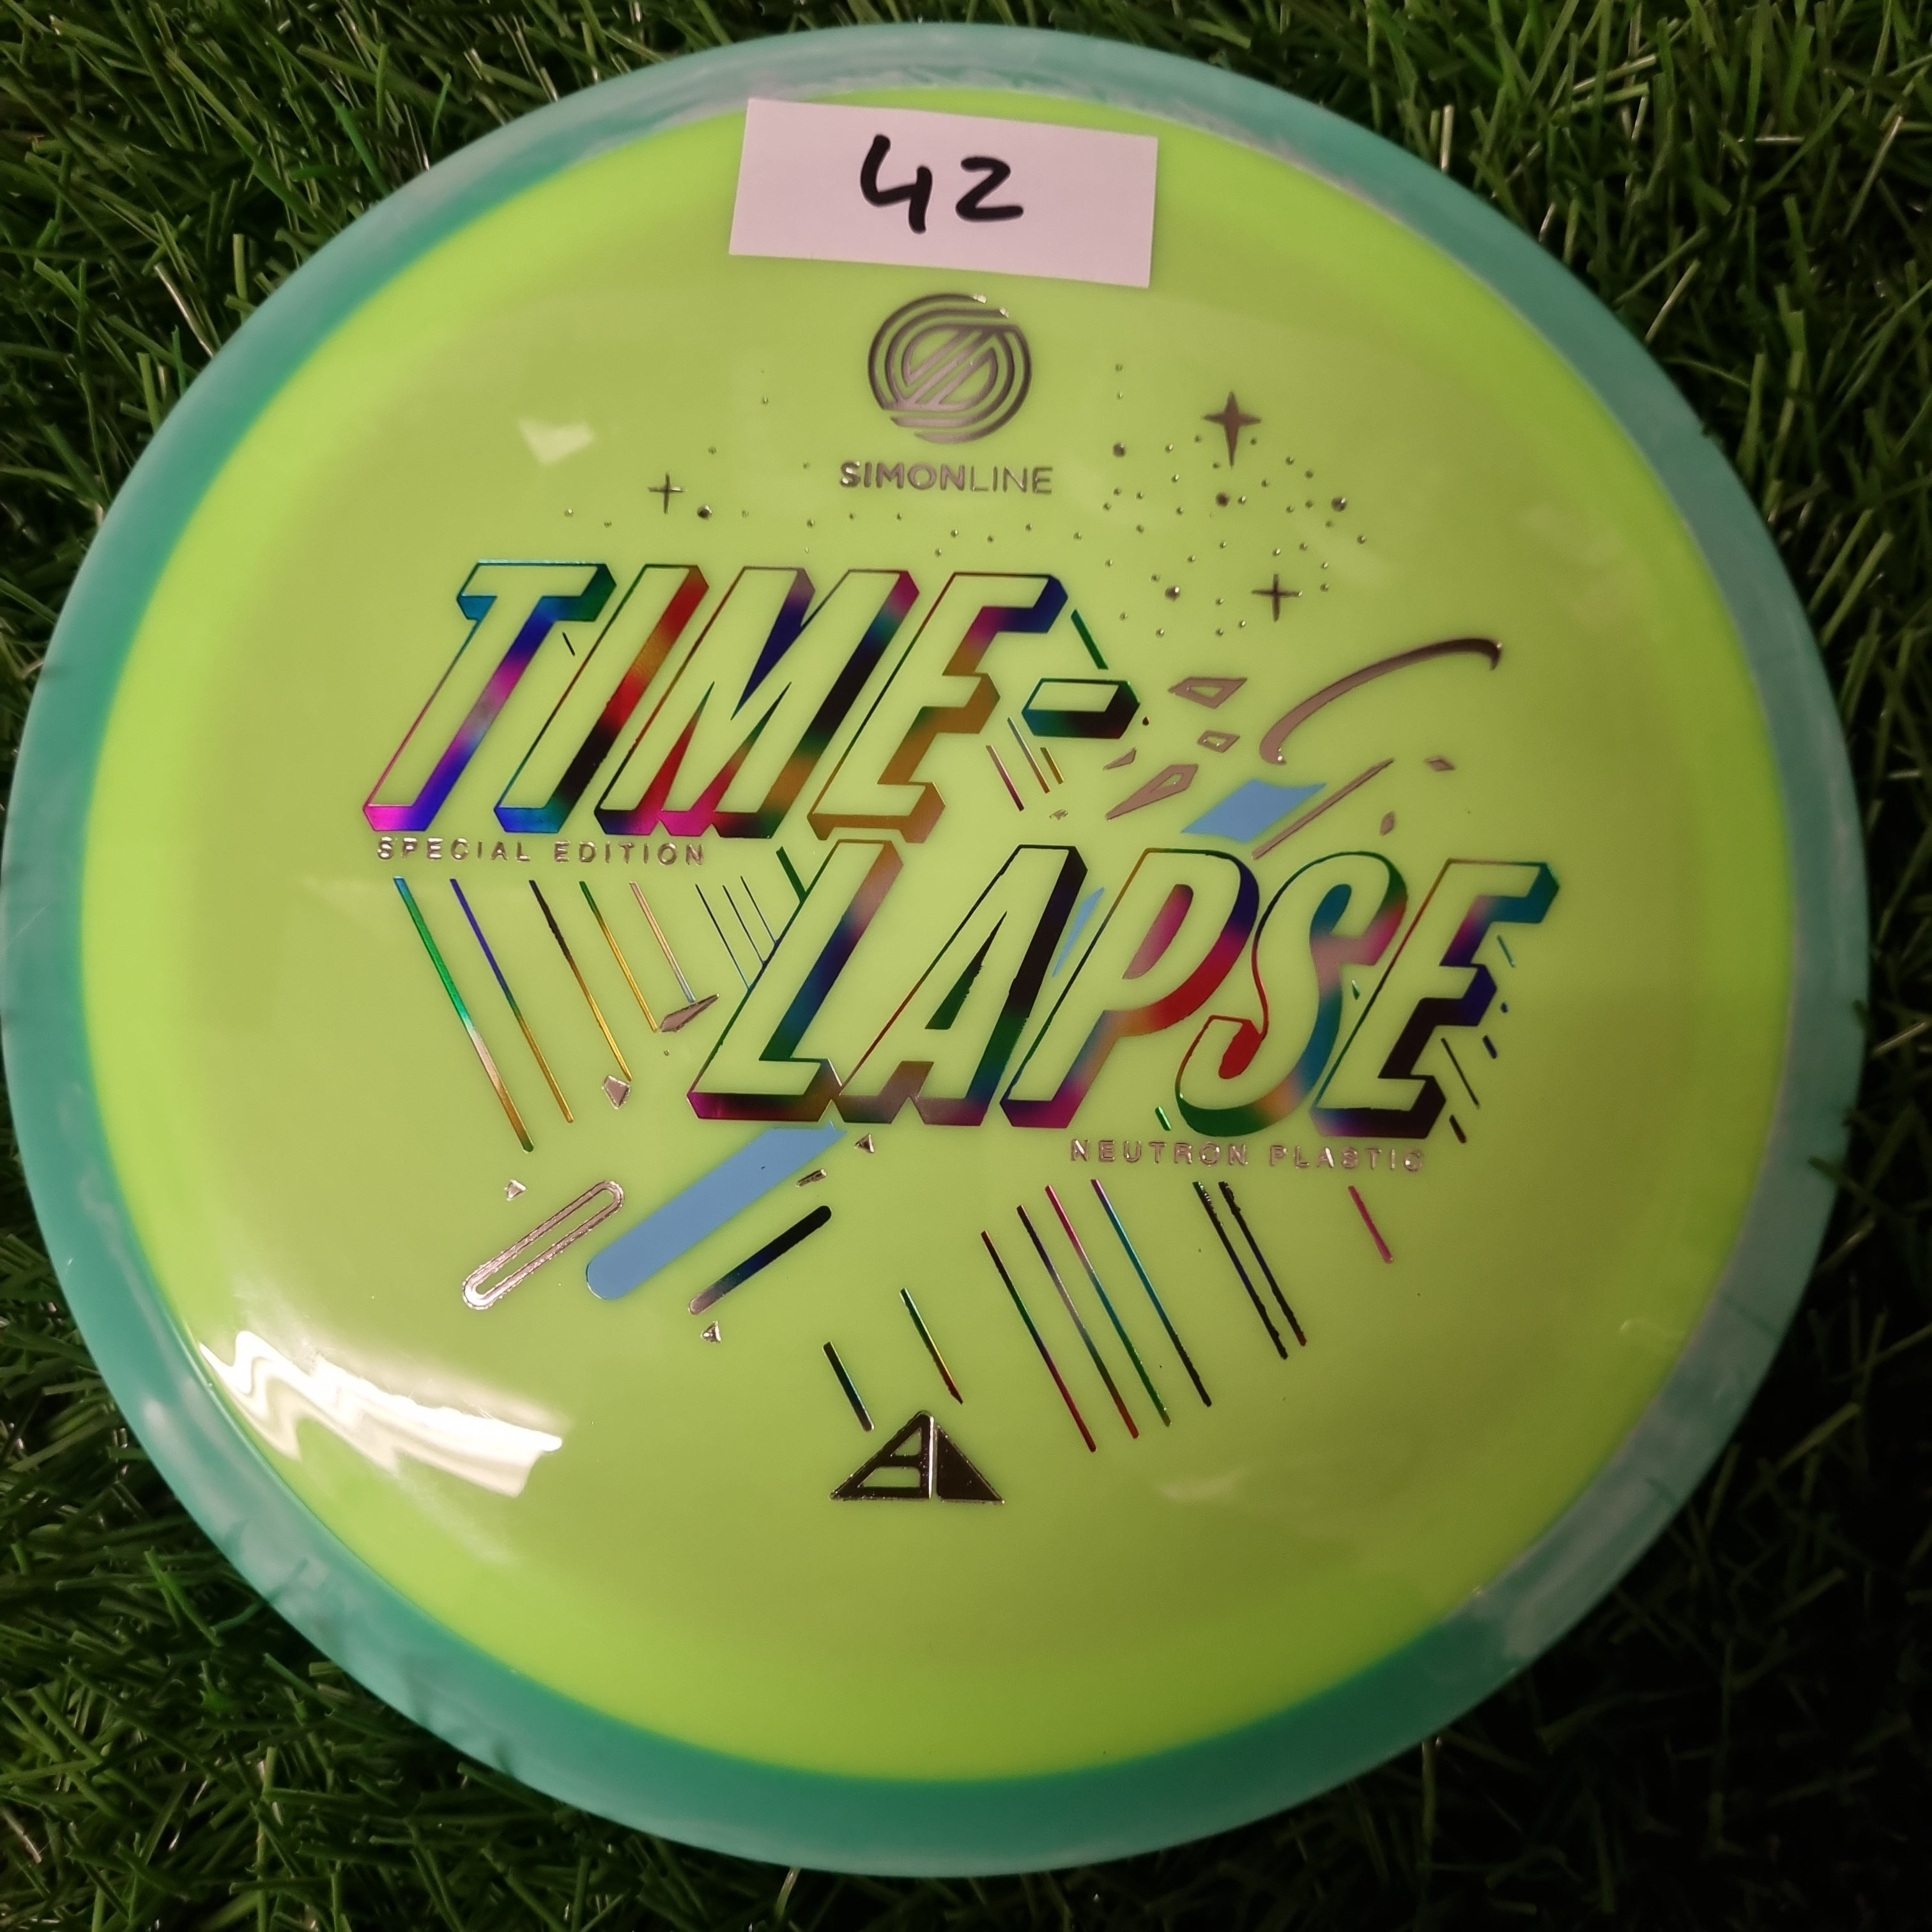 Special Edition Neutron Time-Lapse